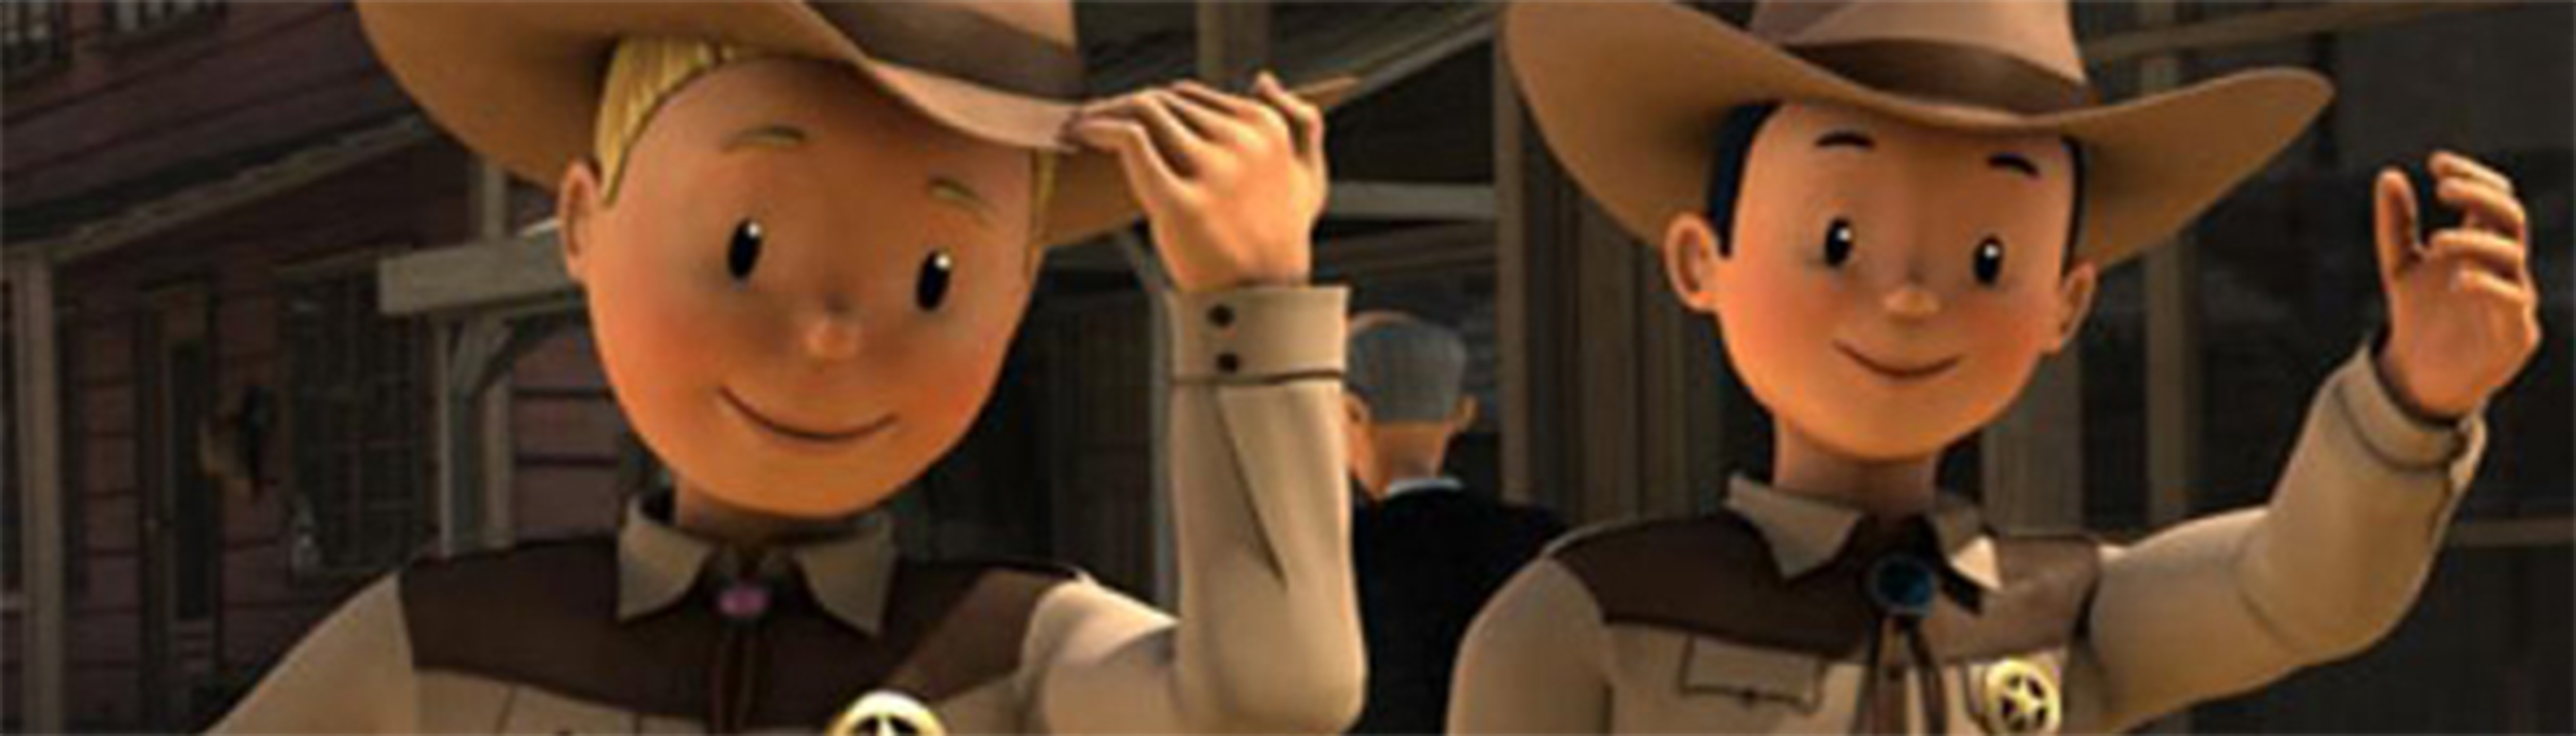 دانلود انیمیشن کارتونی Luke and Lucy The Texas Ranger با دوبله گلوری